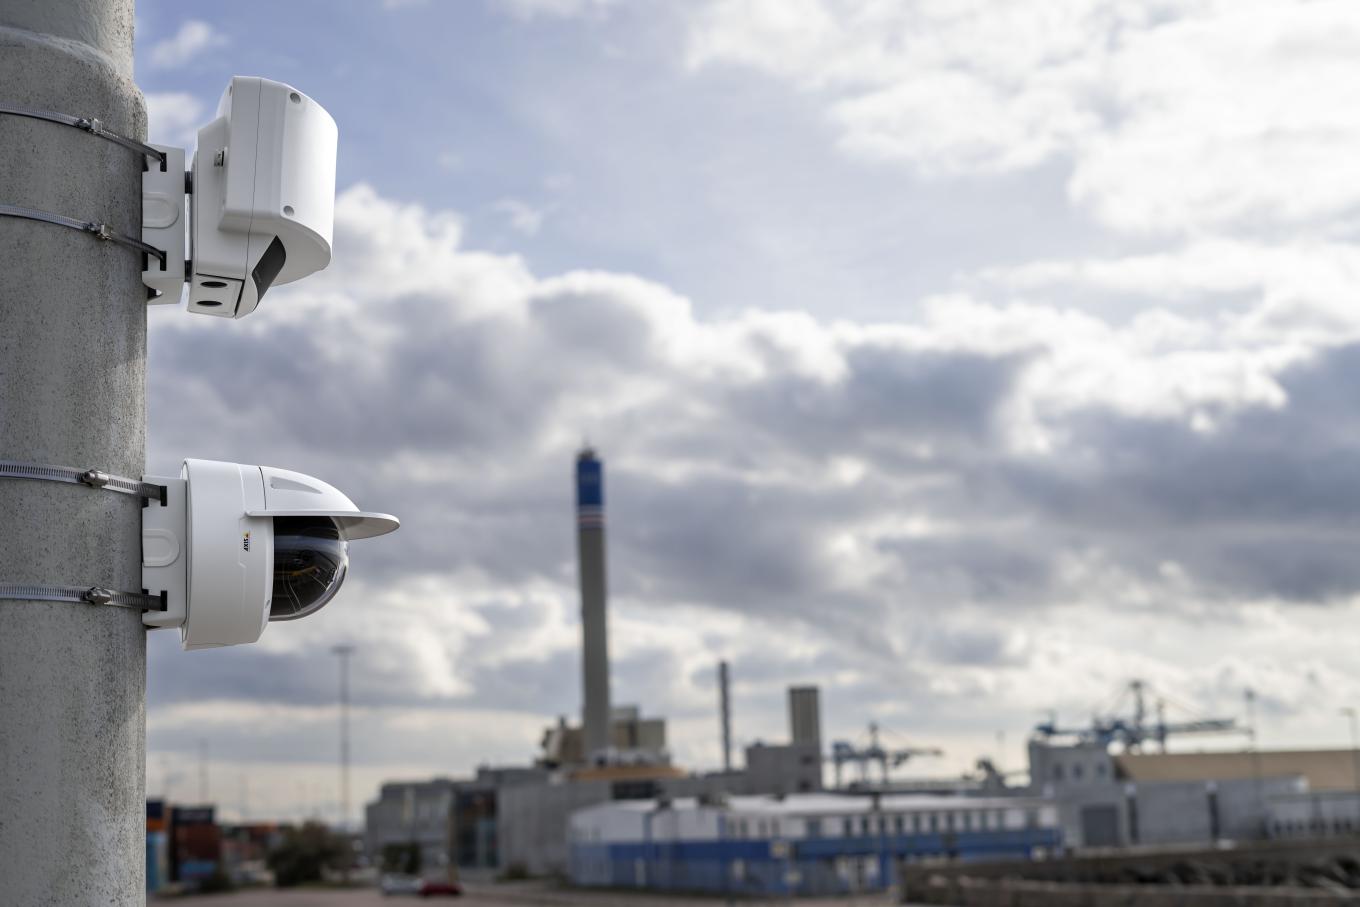 radar and panoramic camera mounted on pole